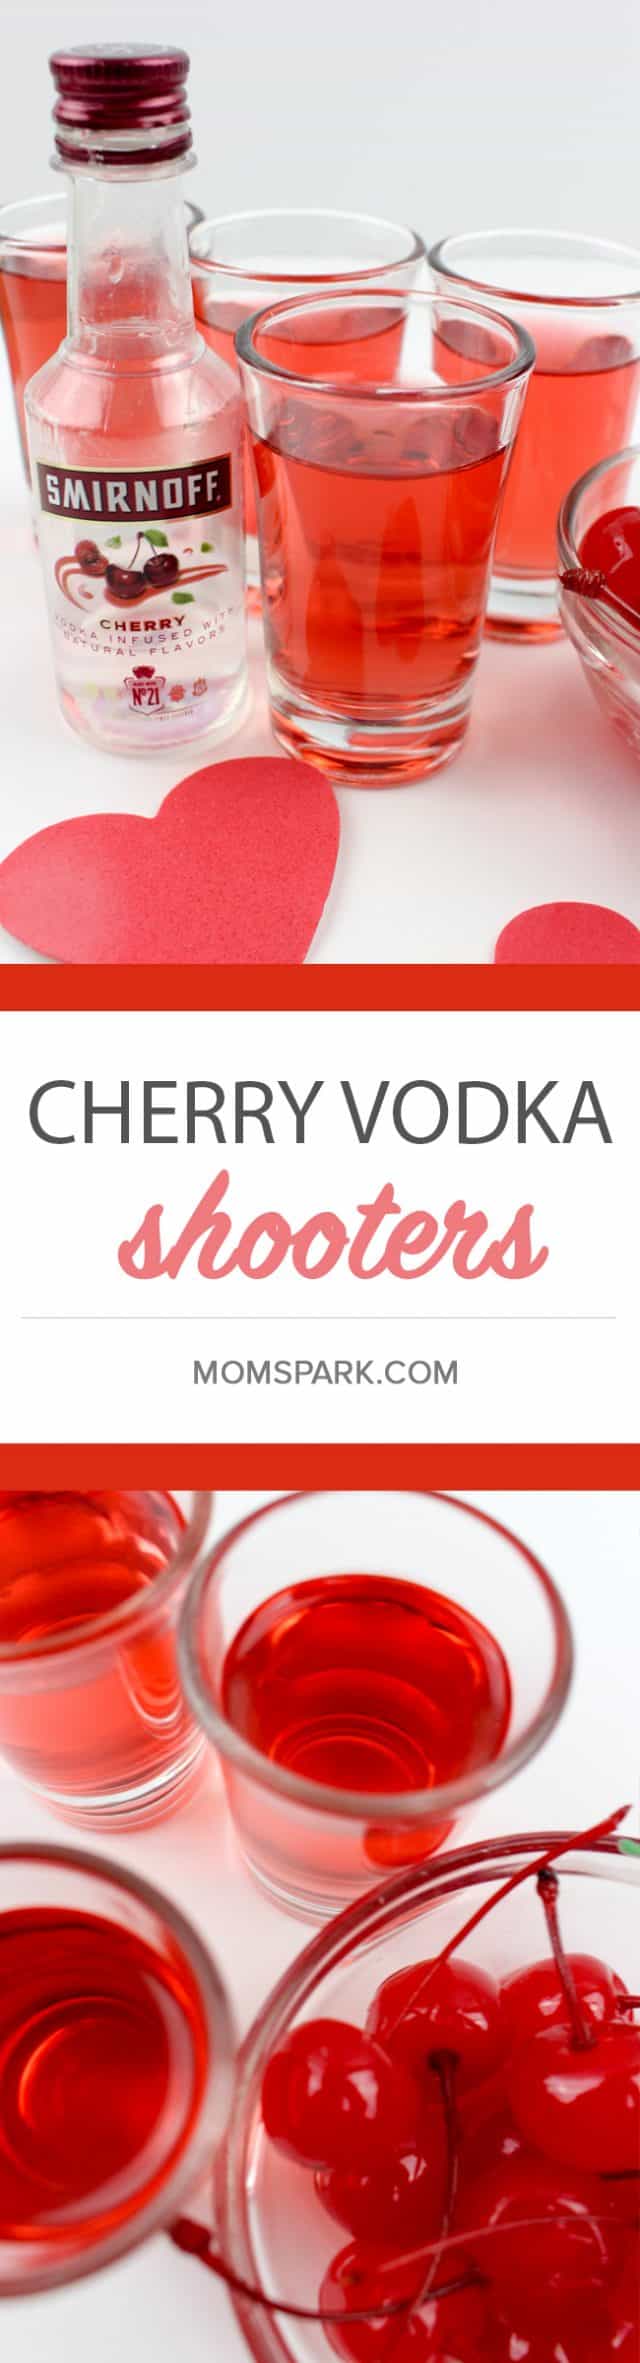 Pink Cherry Vodka Shooters Recipe Mom Spark Mom Blogger 7213